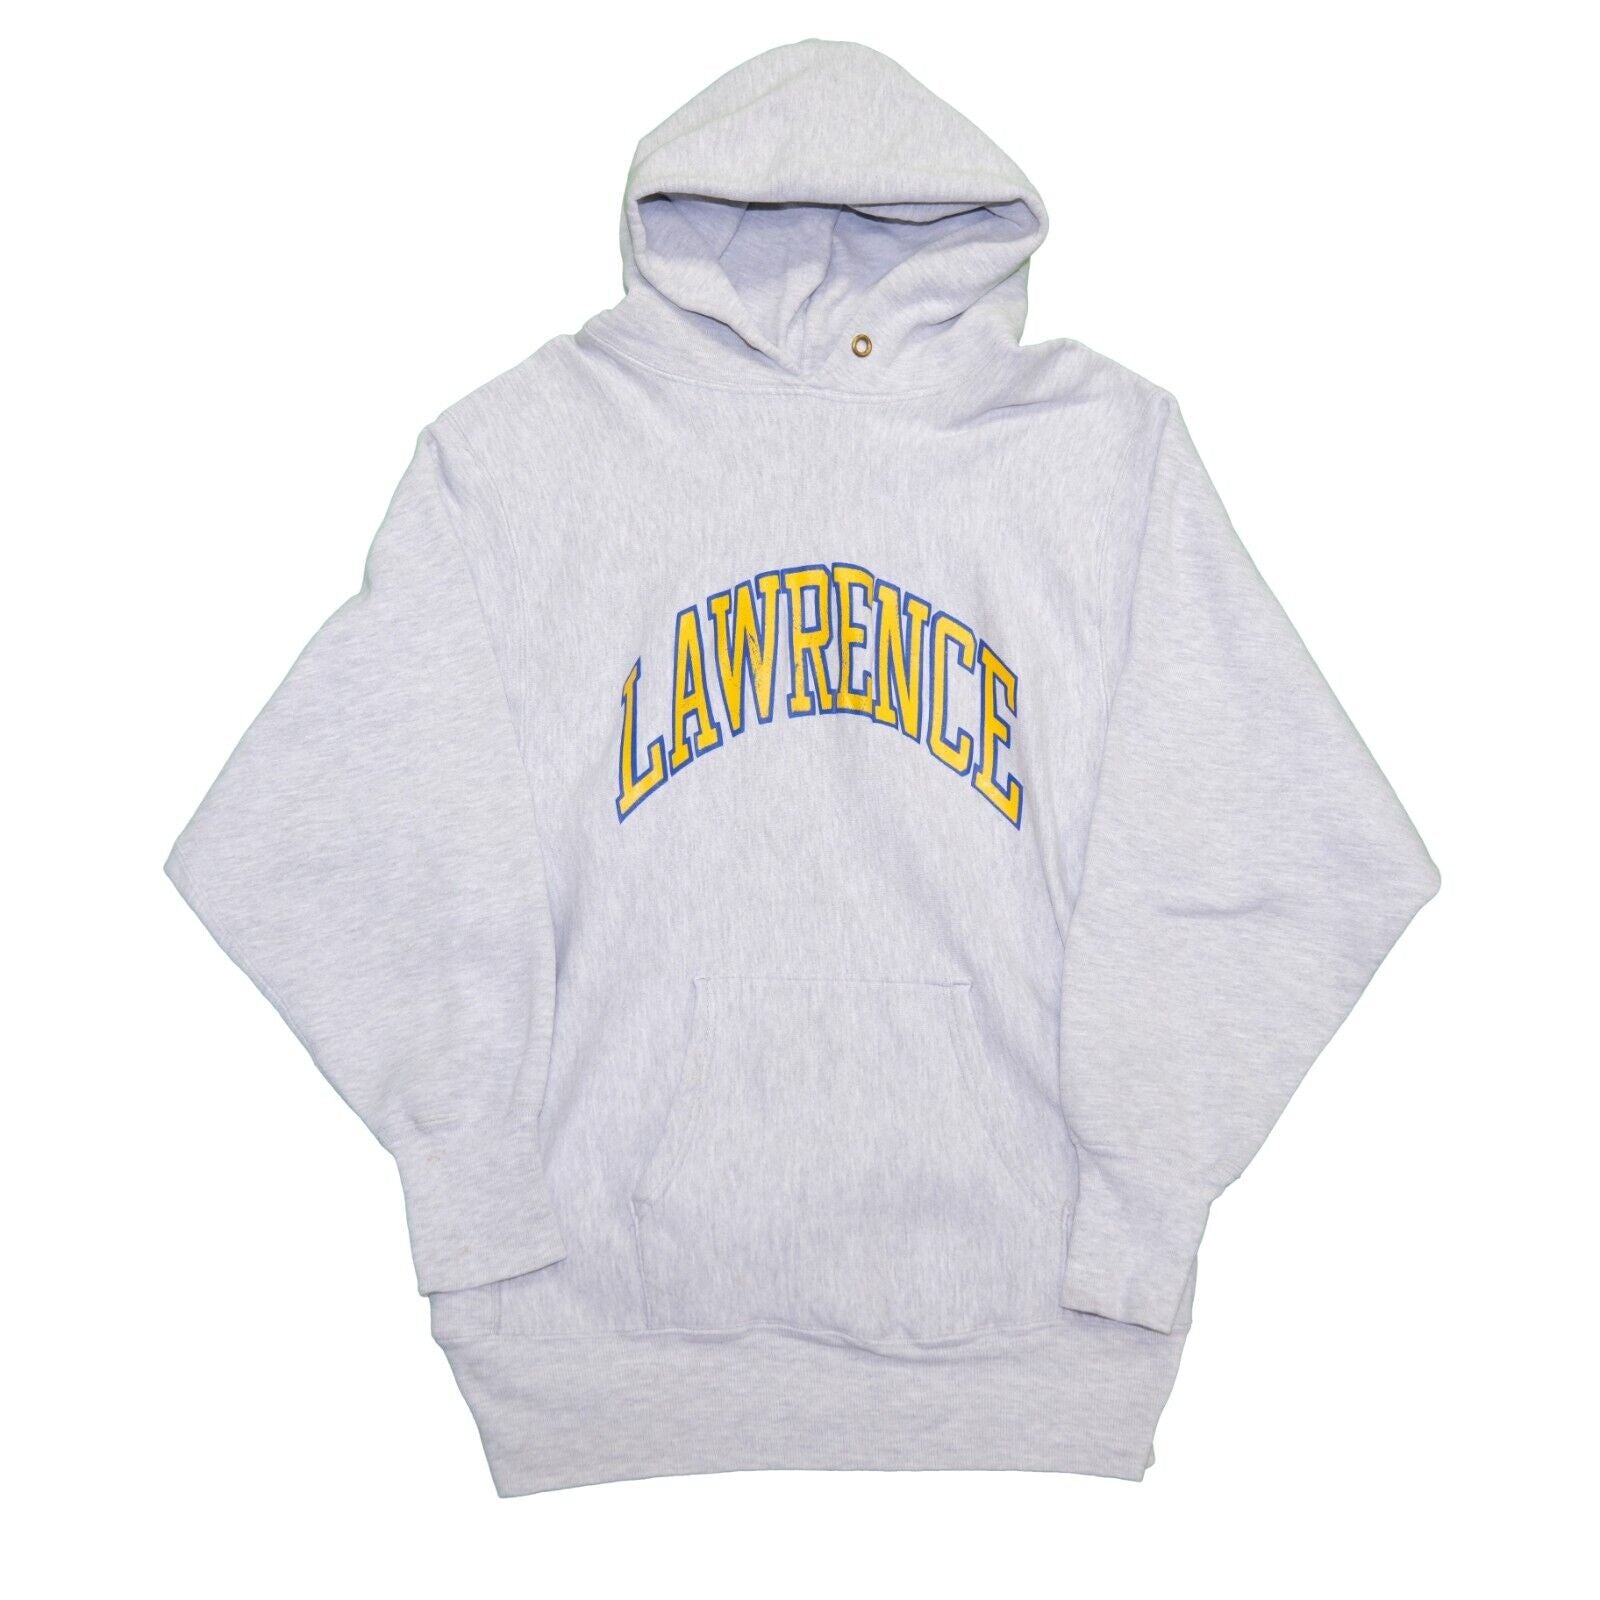 Vintage St Lawrence Champion Reverse Weave Sweatshirt Hoodie Size